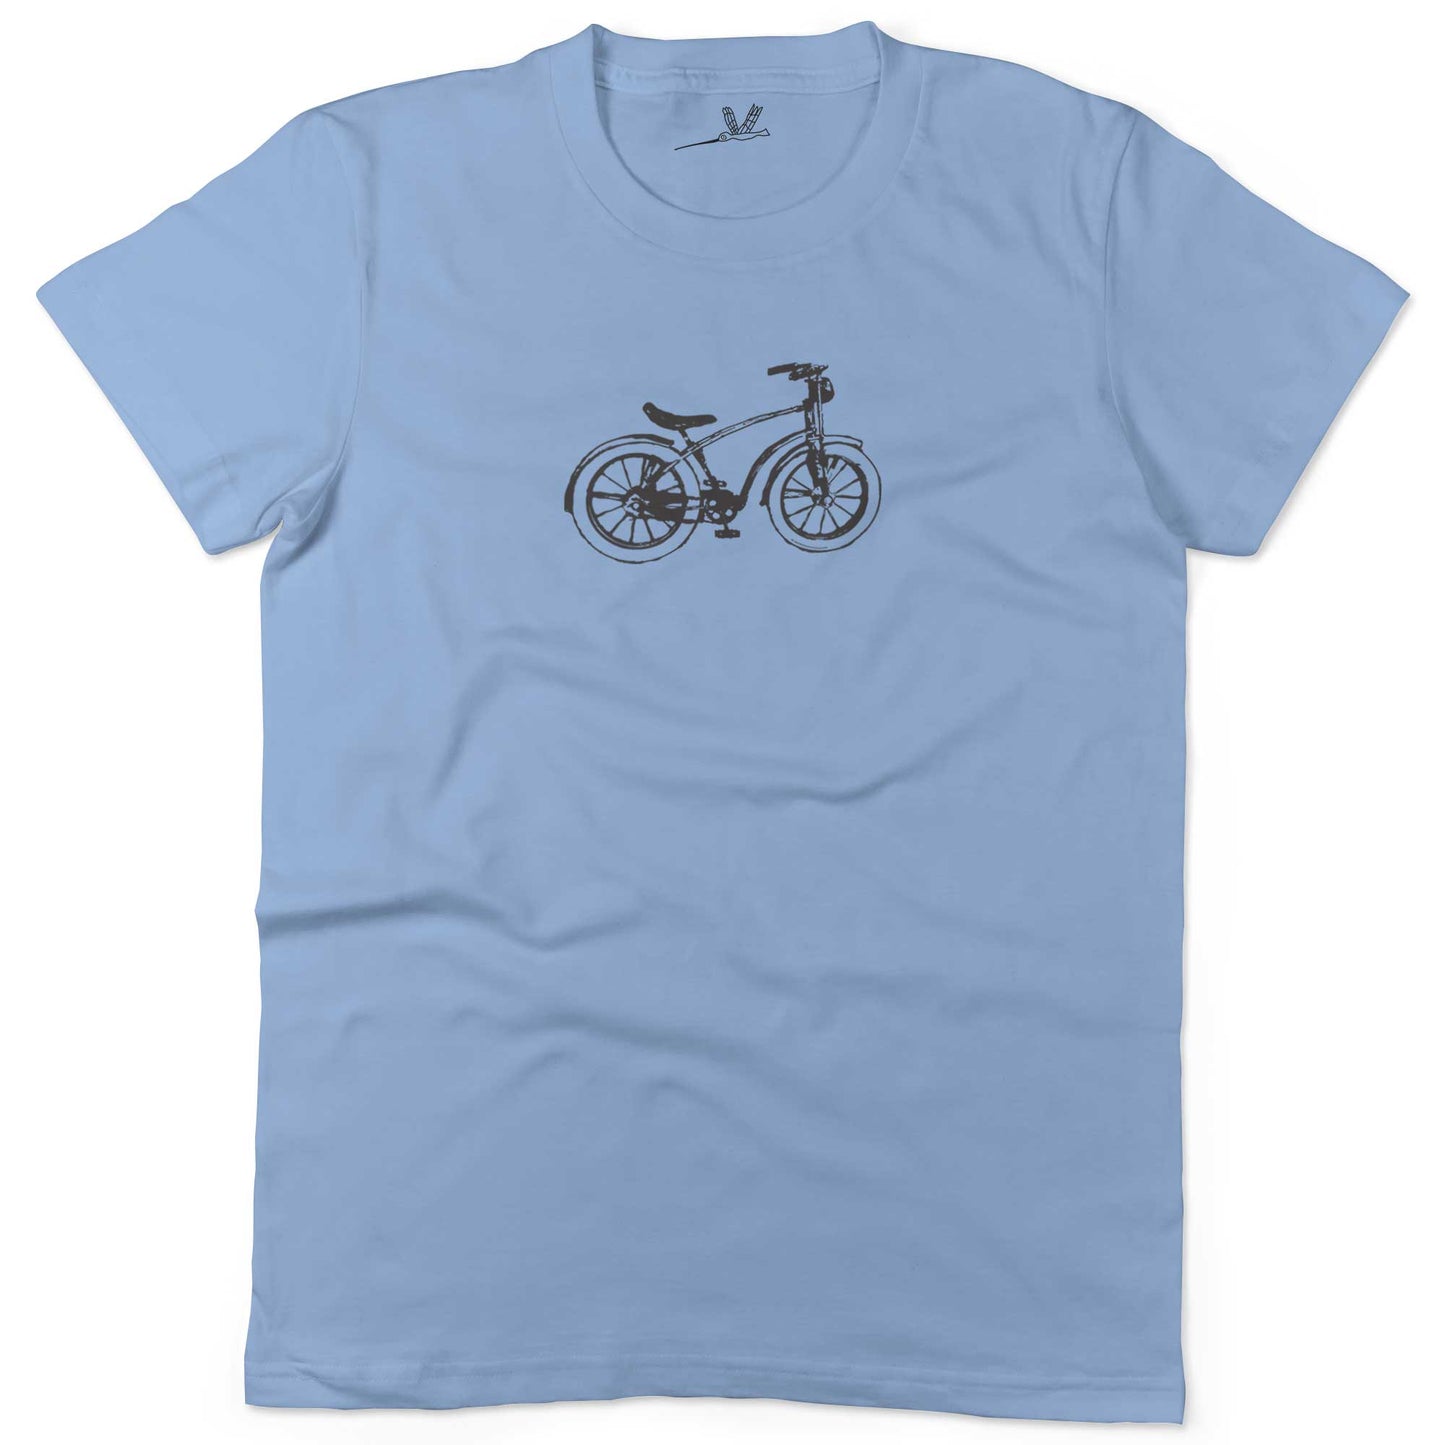 Vintage Bike Unisex Or Women's Cotton T-shirt-Baby Blue-Woman